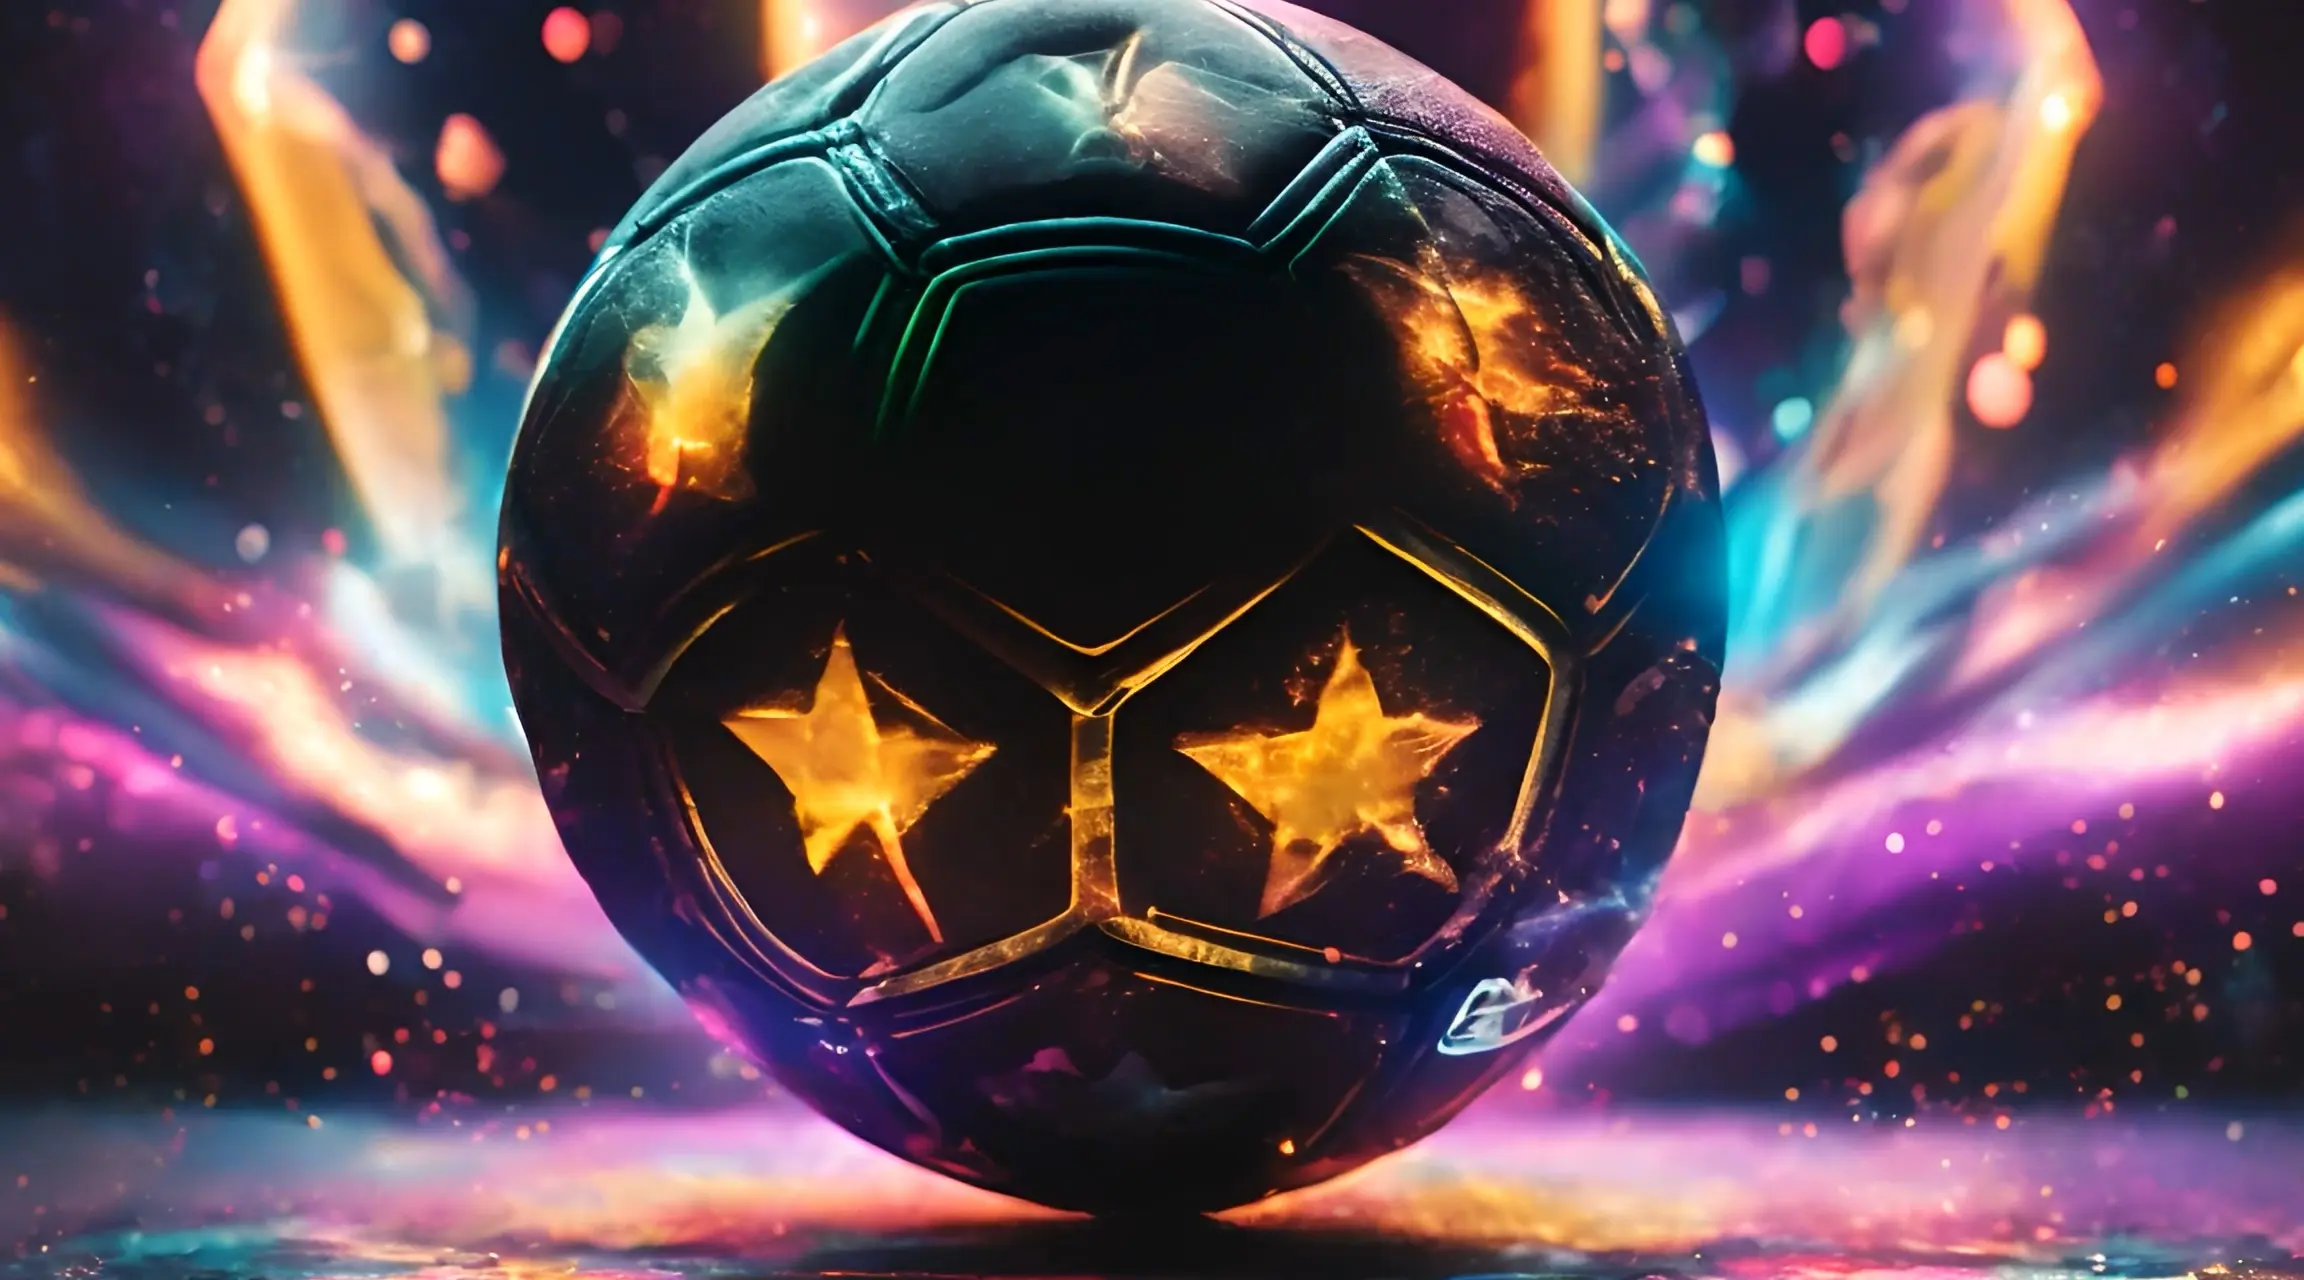 Stellar Soccer Cosmic Energy Ball Backdrop Video